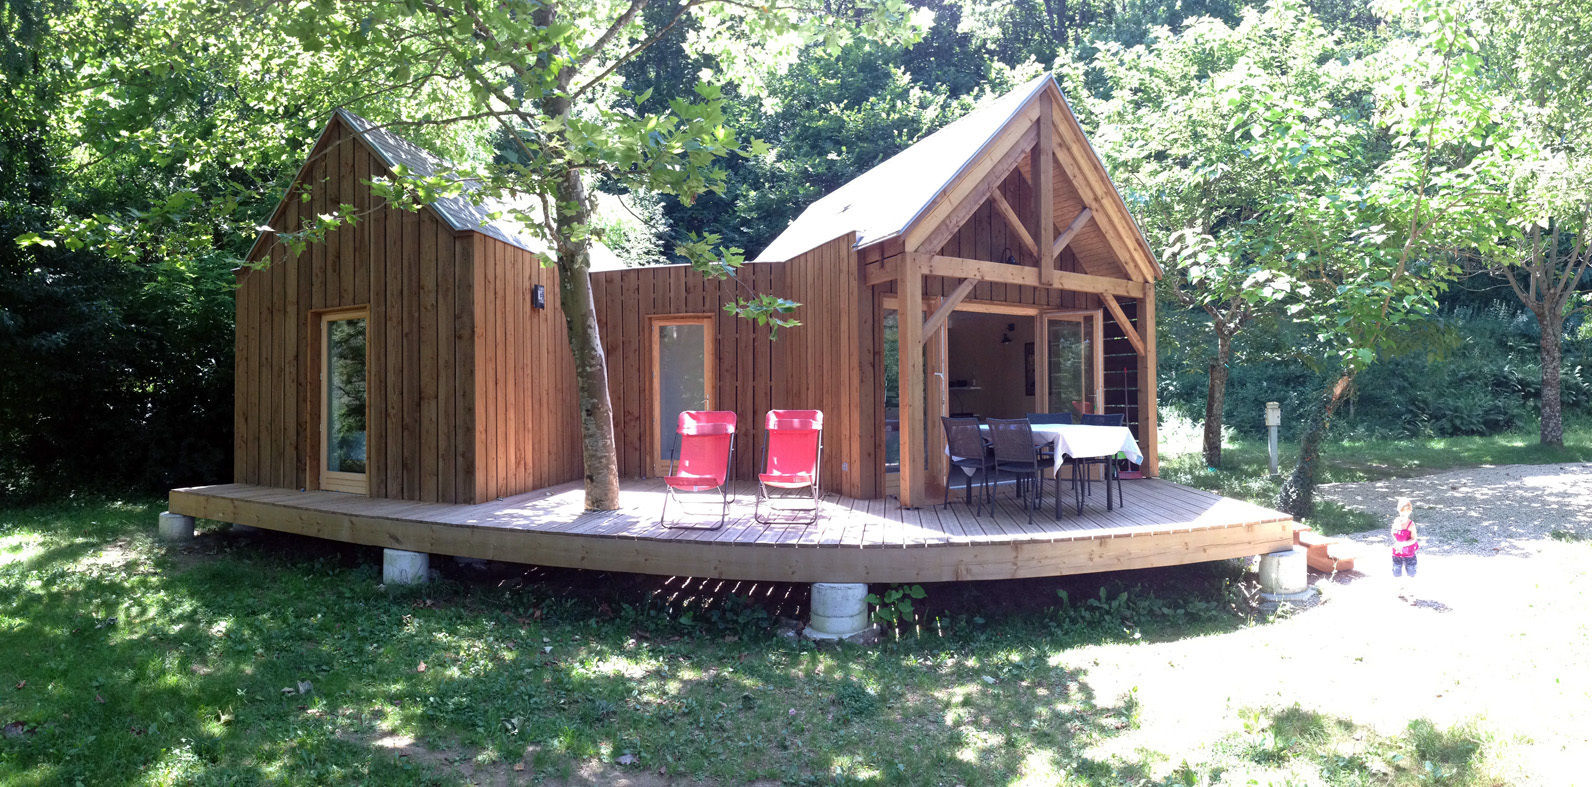 Habitat de loisir en bois - camping les Clots mirandol - bourgnounac, ...architectes ...architectes พื้นที่เชิงพาณิชย์ โรงแรม